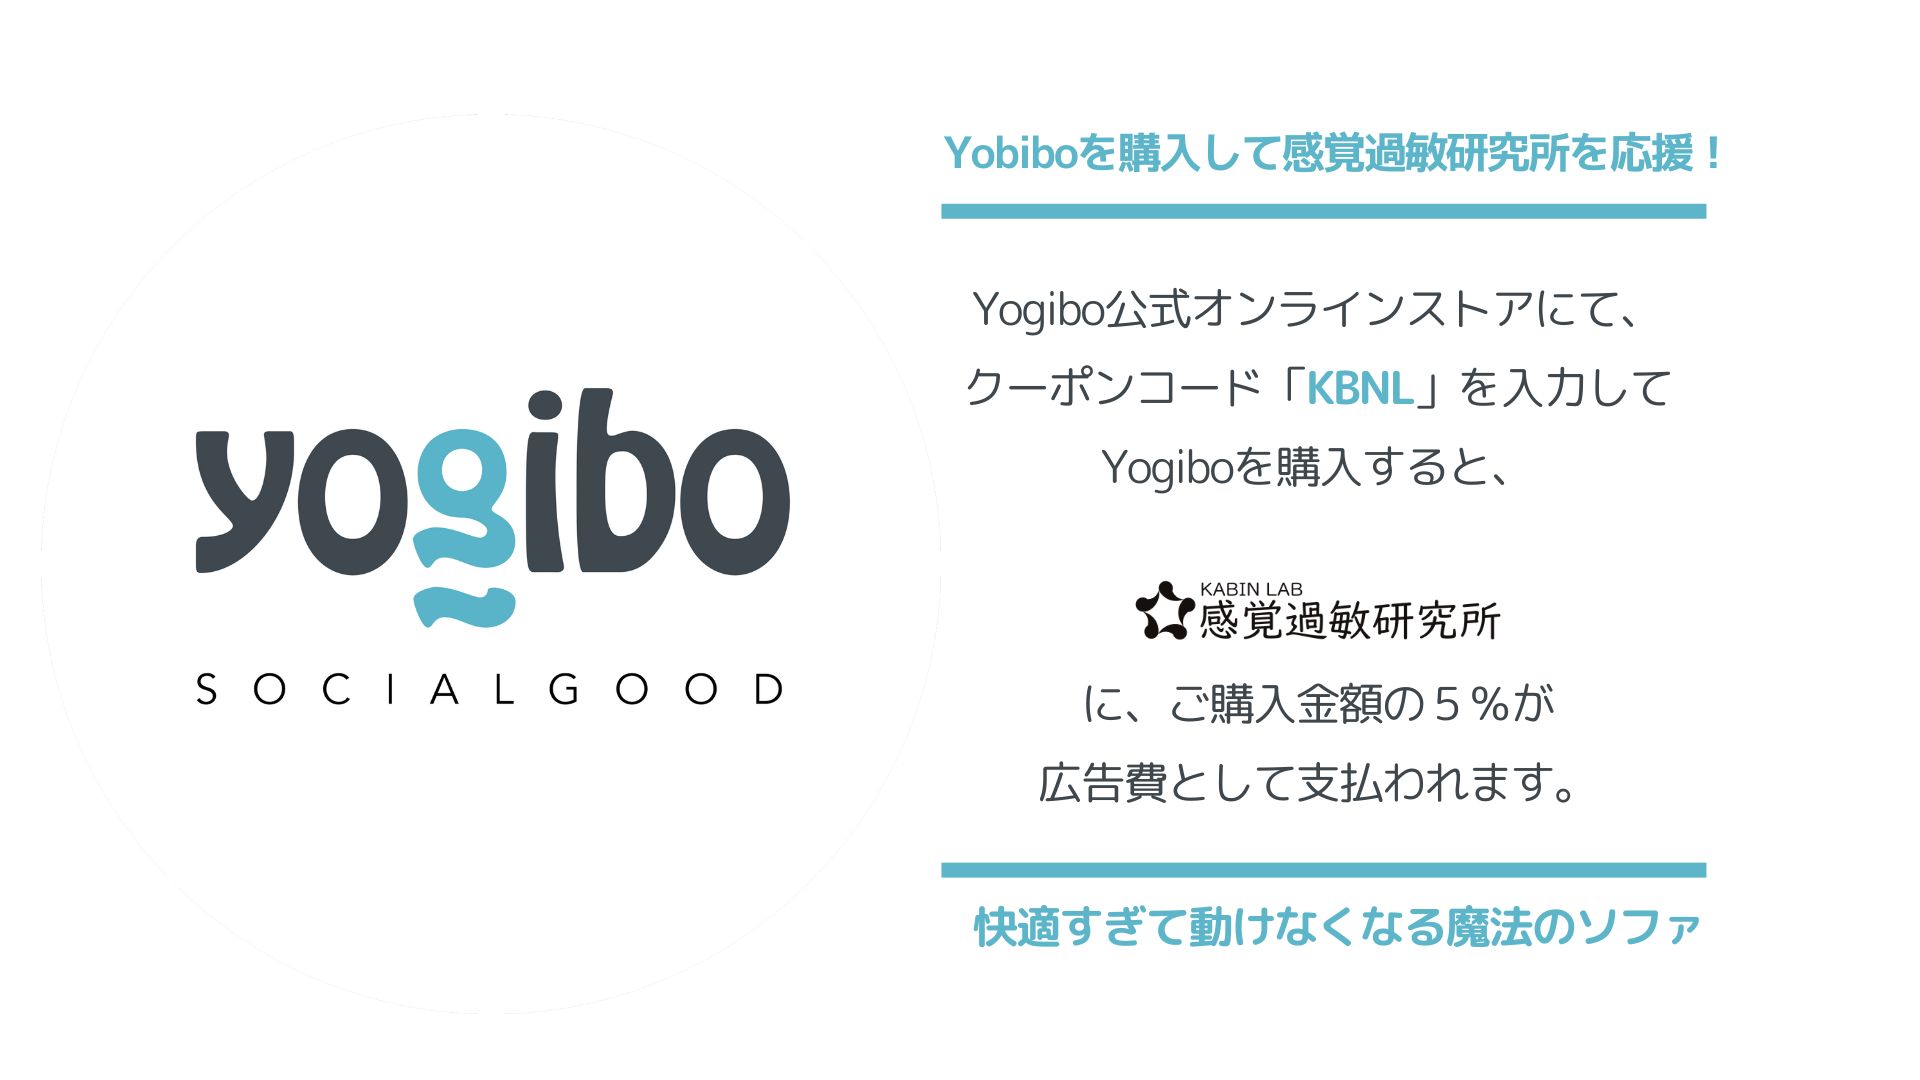 Yogiboを買って感覚過敏研究所を応援